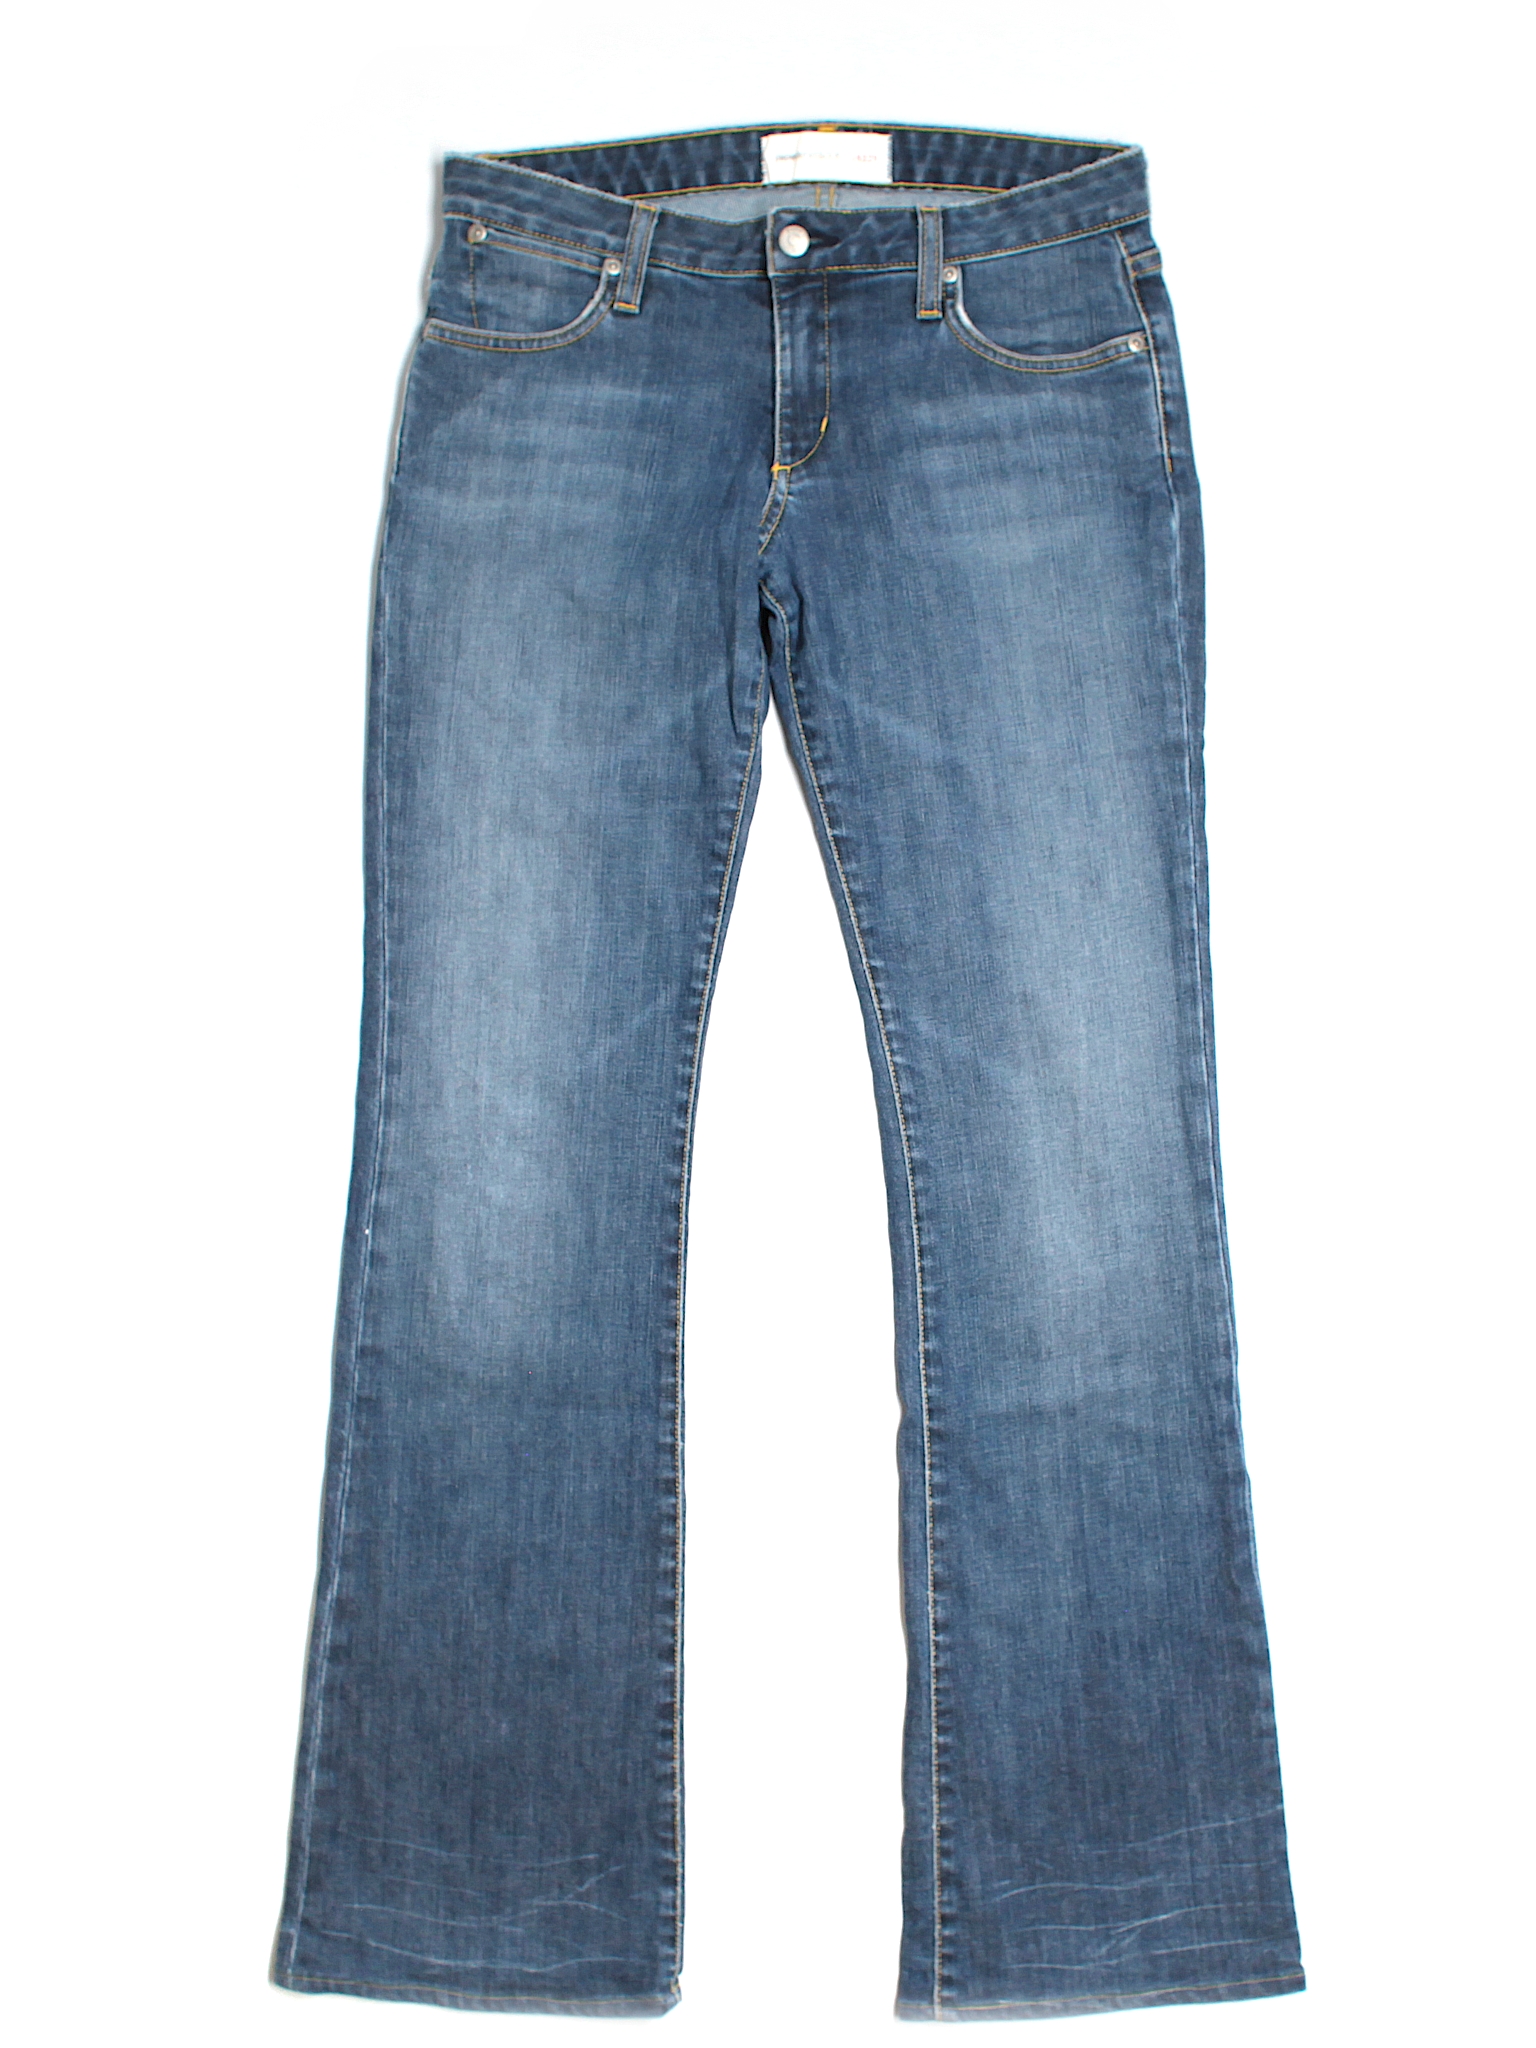 Paper Denim & Cloth Jeans 27 Waist - 88% off | thredUP